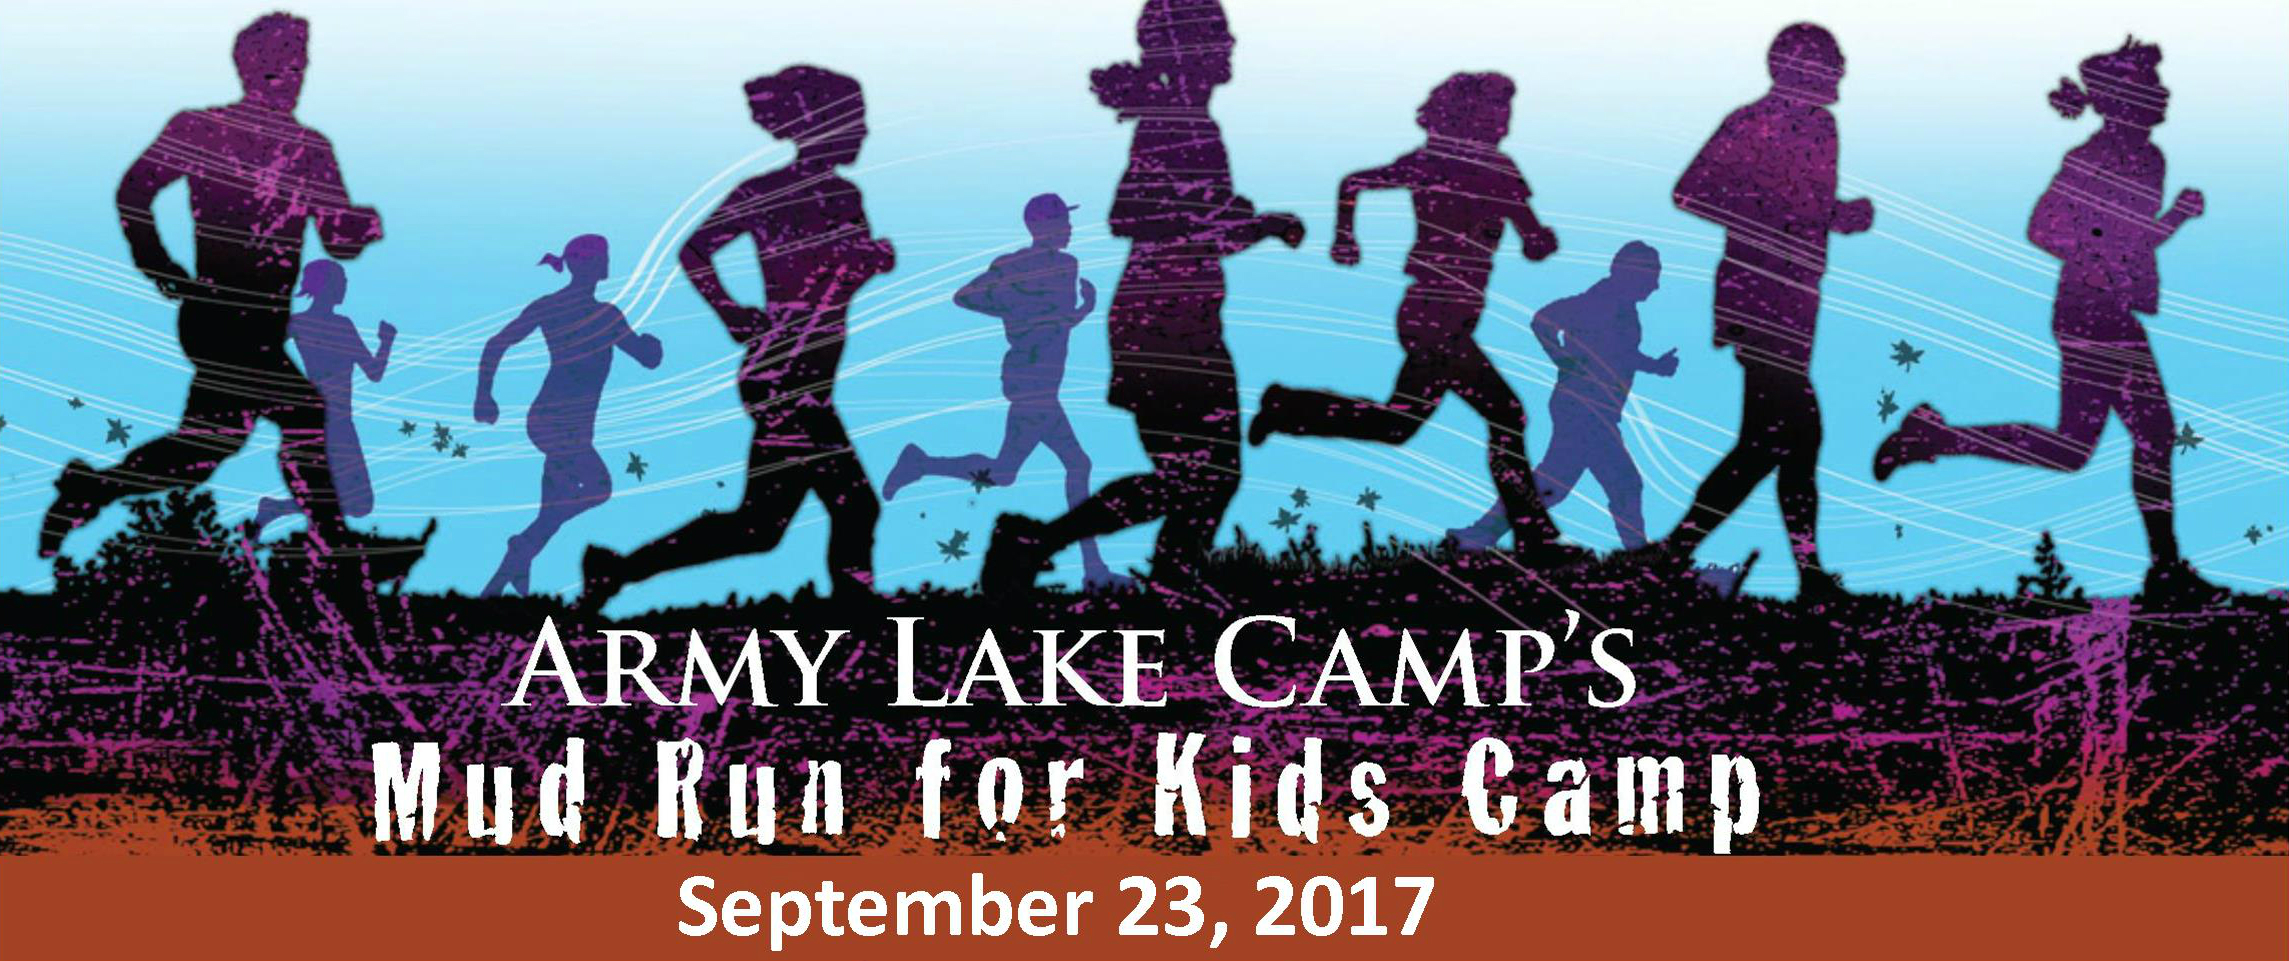 Army Lake Camp Mud Run